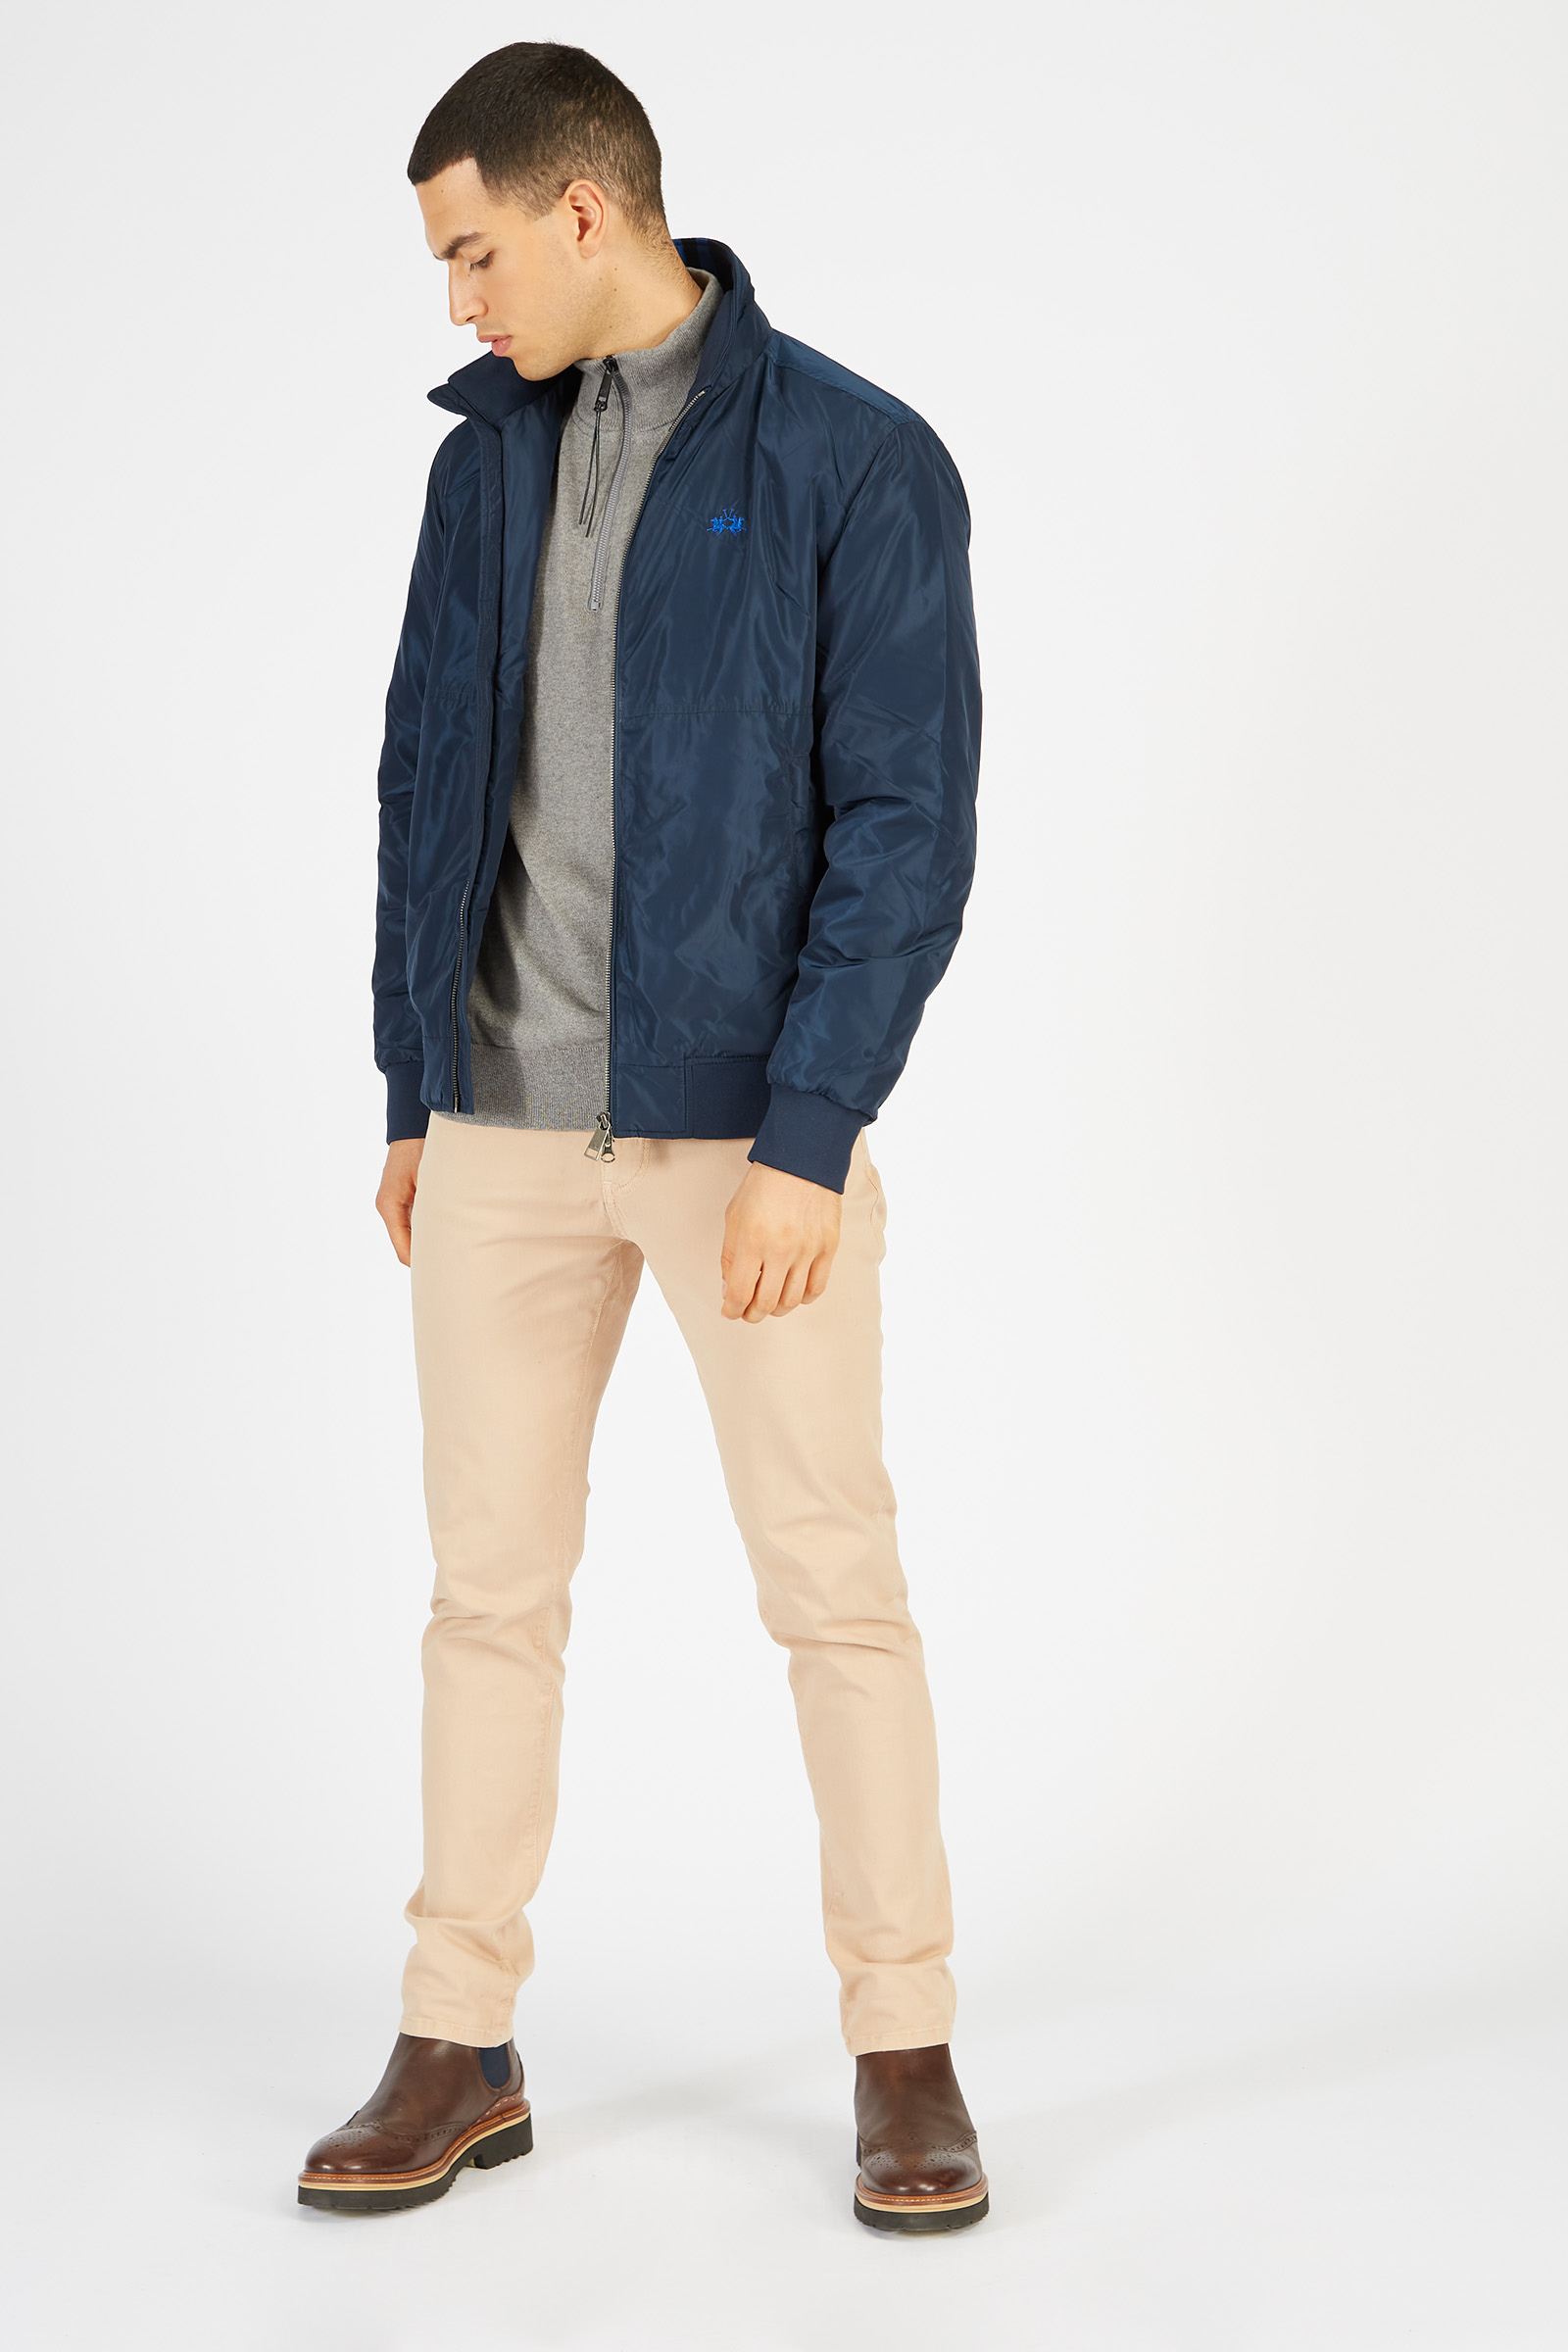 Men’s jacket in nylon regular fit model